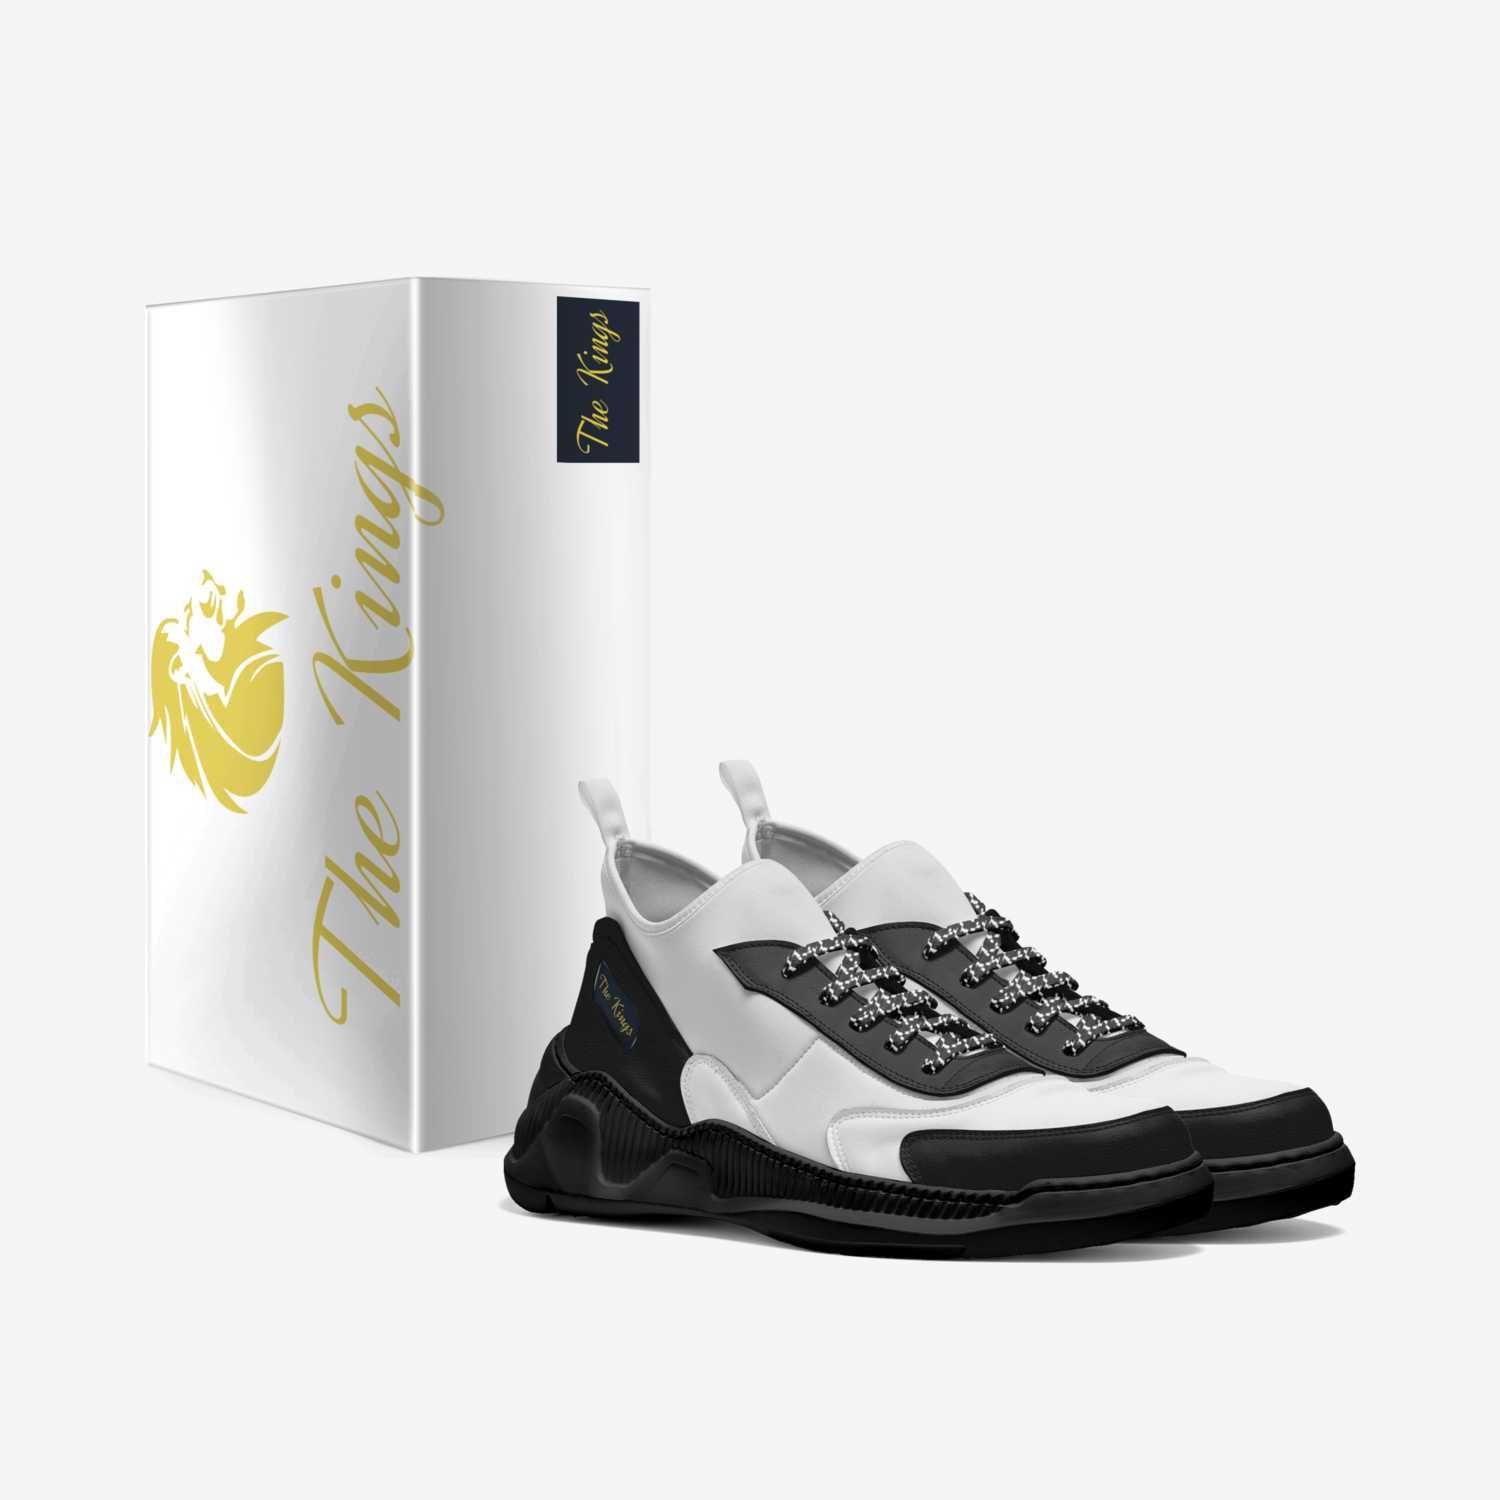 Al-Buraq custom made in Italy shoes by Ahmed F M Hamdan | Box view